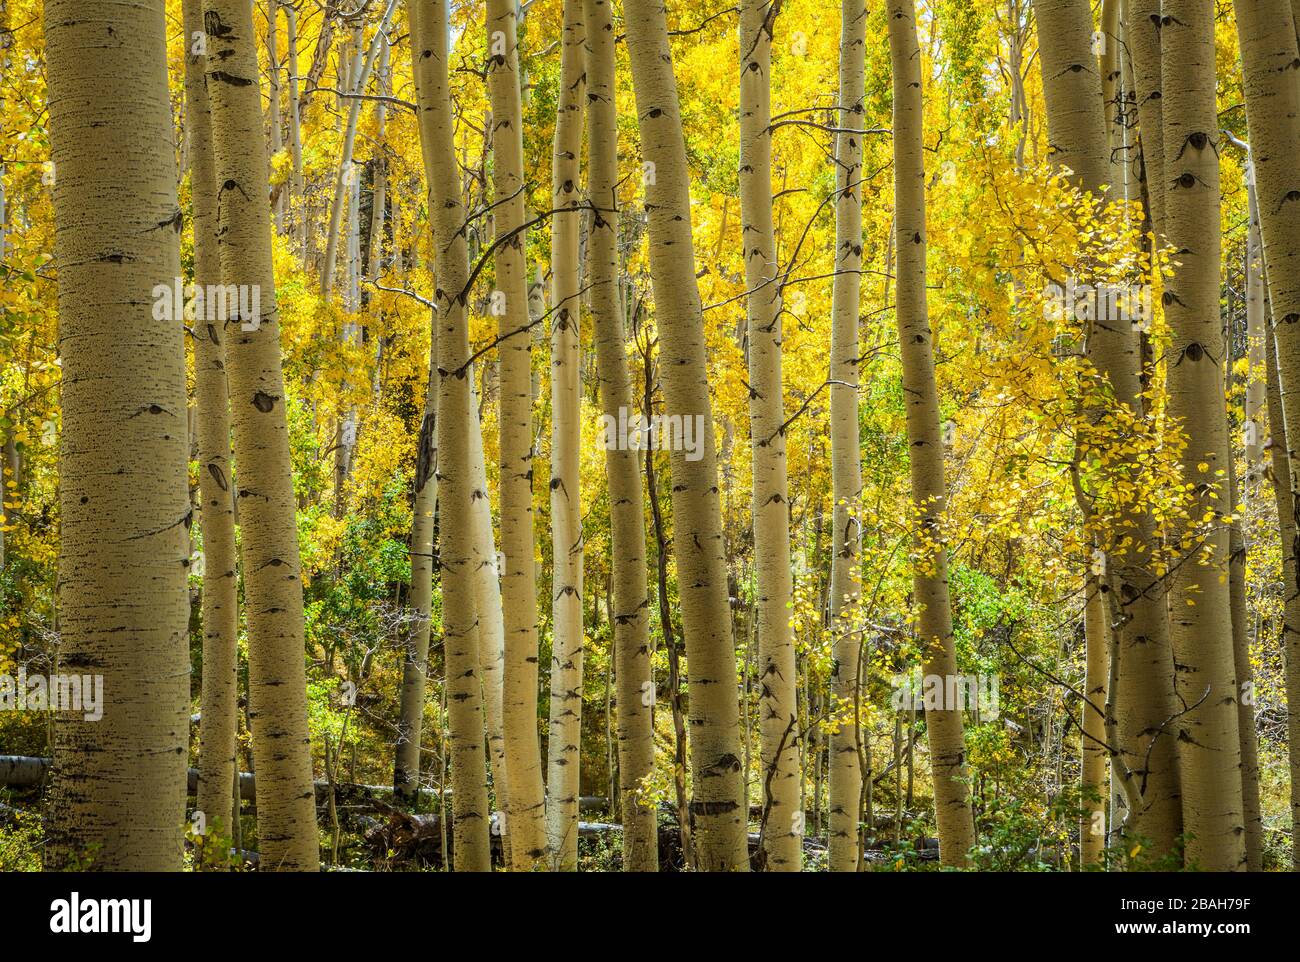 Aspen trees in Fall colors, La Sal mountains, Utah, USA. Stock Photo